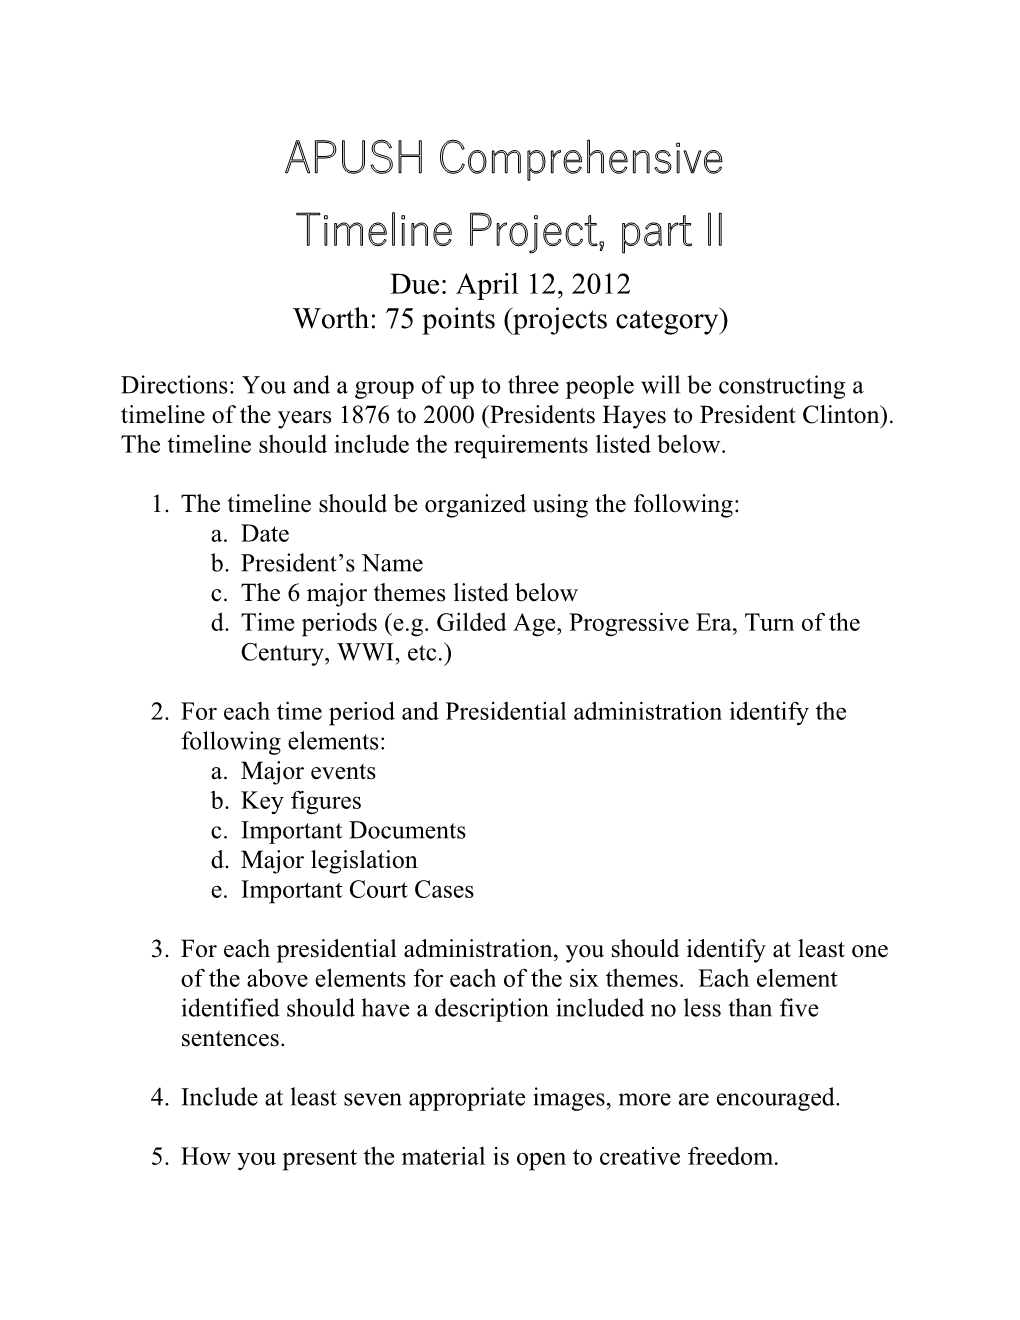 APUSH Comprehensive Timeline Project